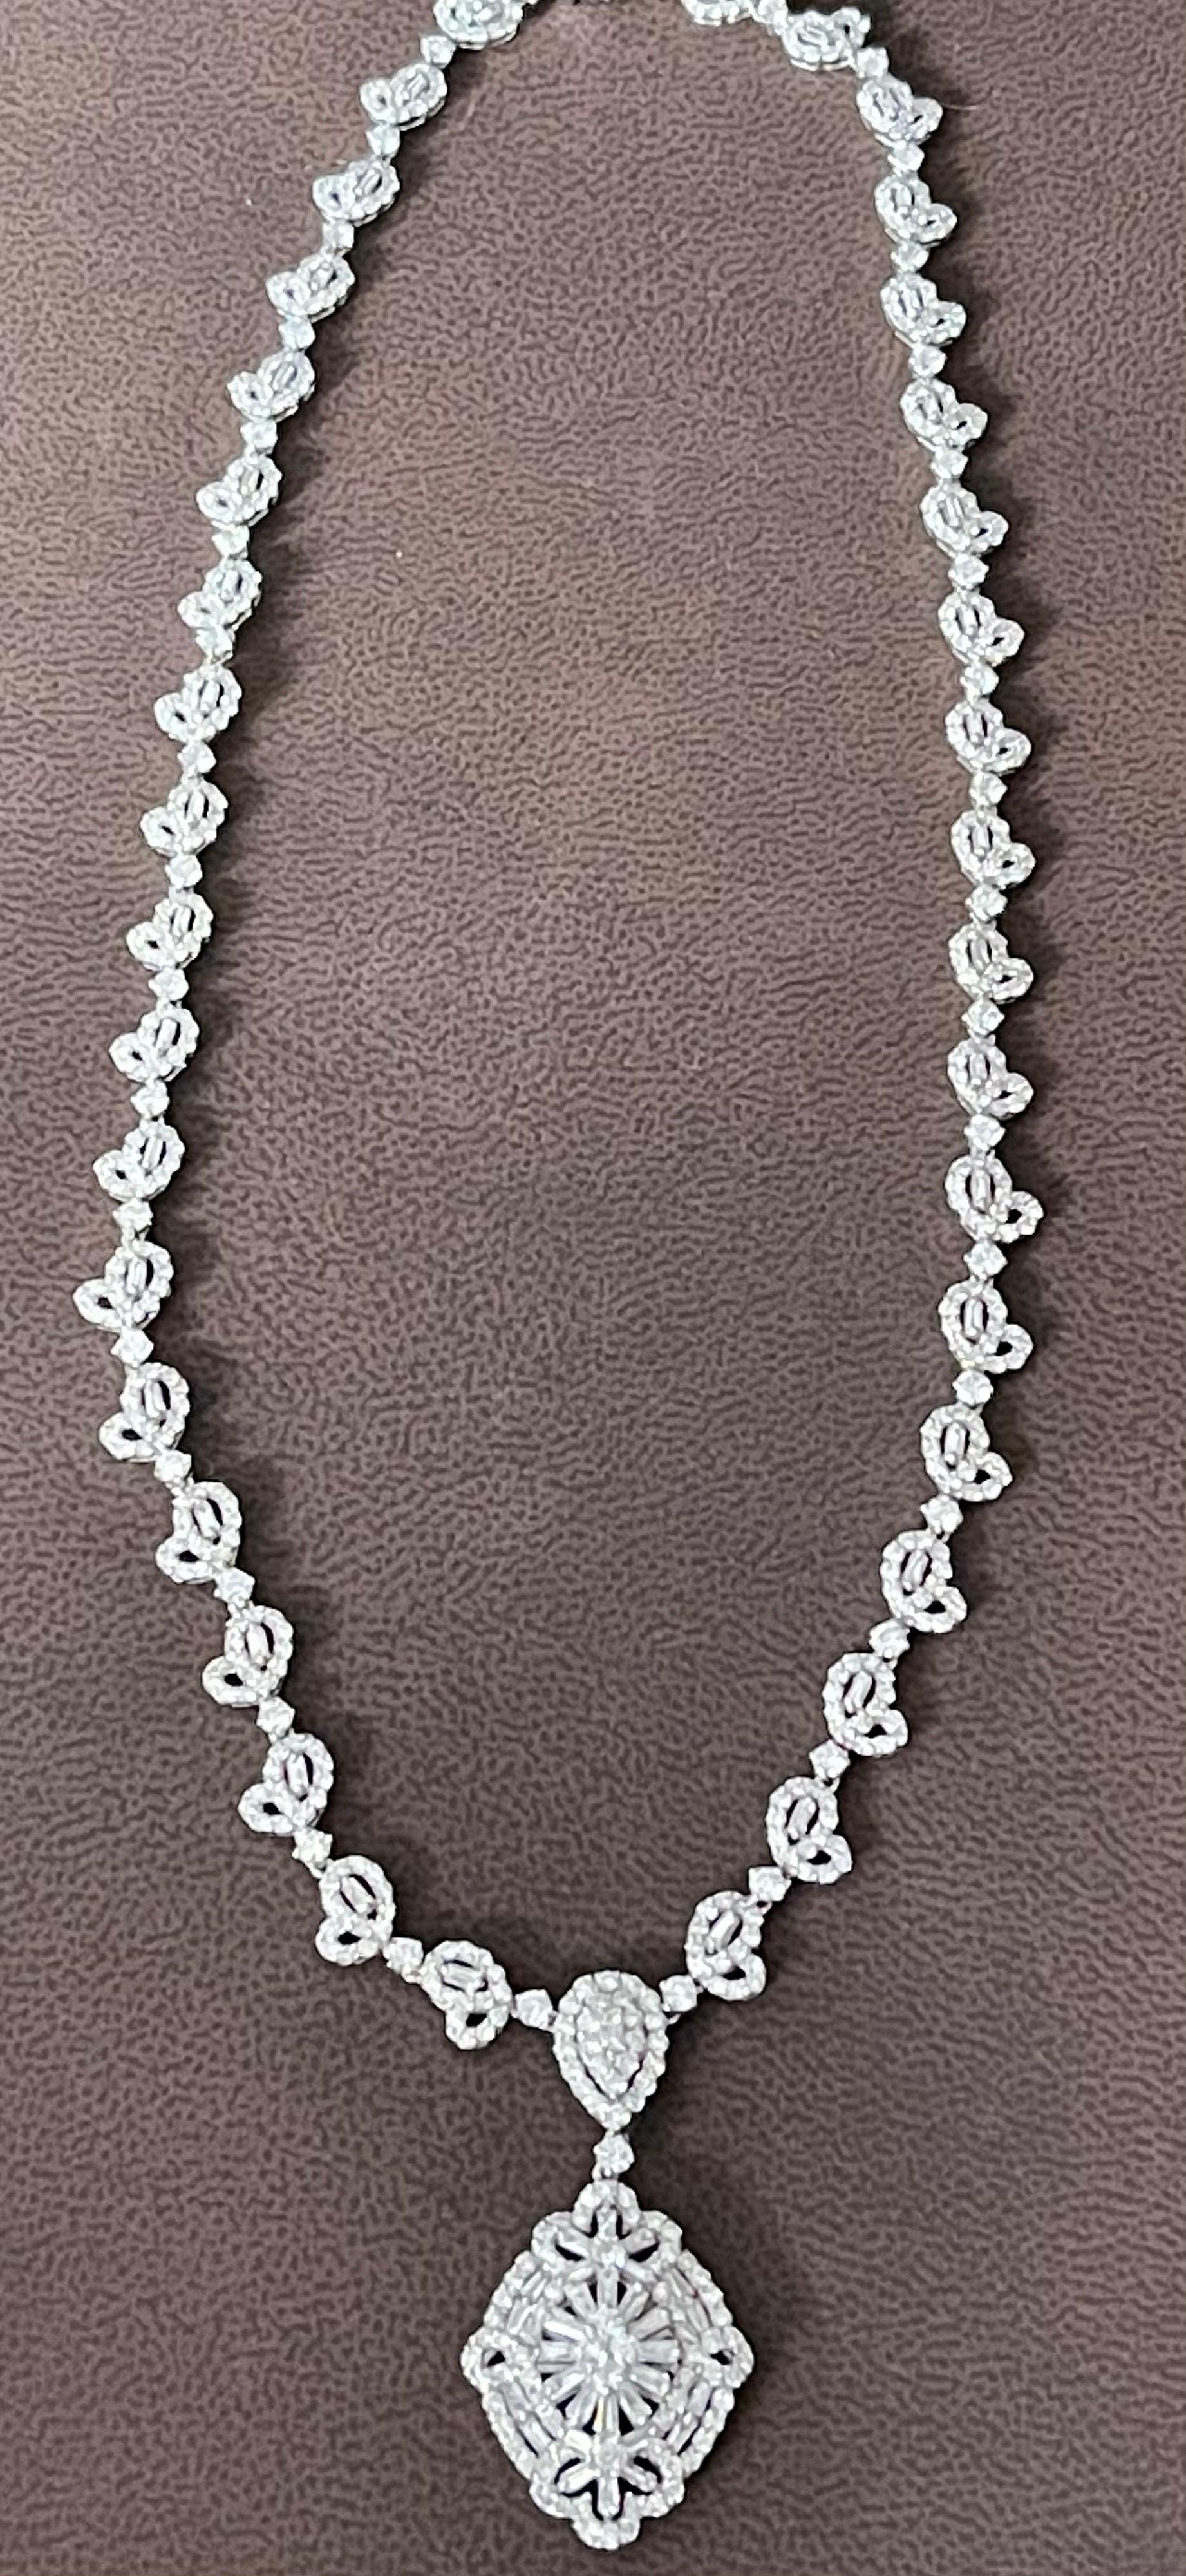 11.4 Carat Diamond Necklace in 18 Karat White Gold Bridal Brand New 5